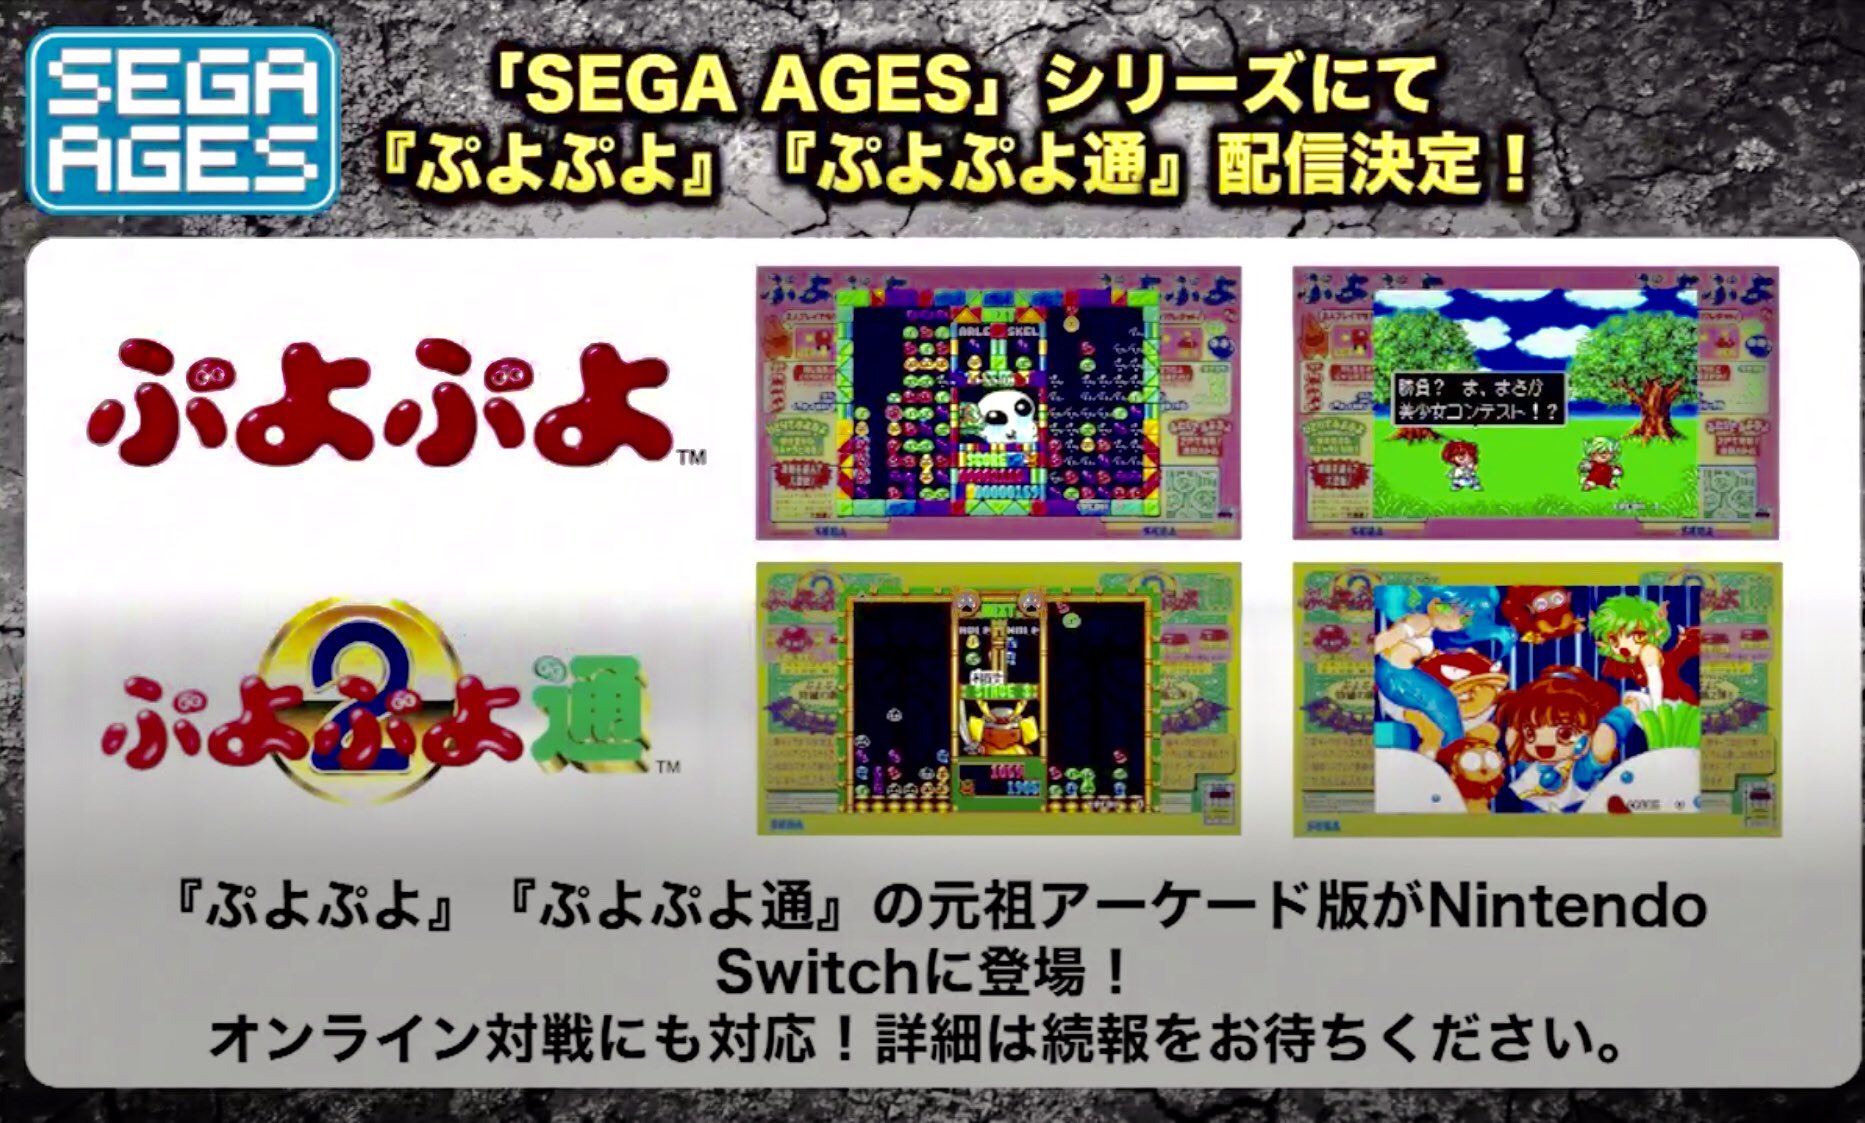 Sega-Ages-Puyo-Puyo_12-16-18.jpg